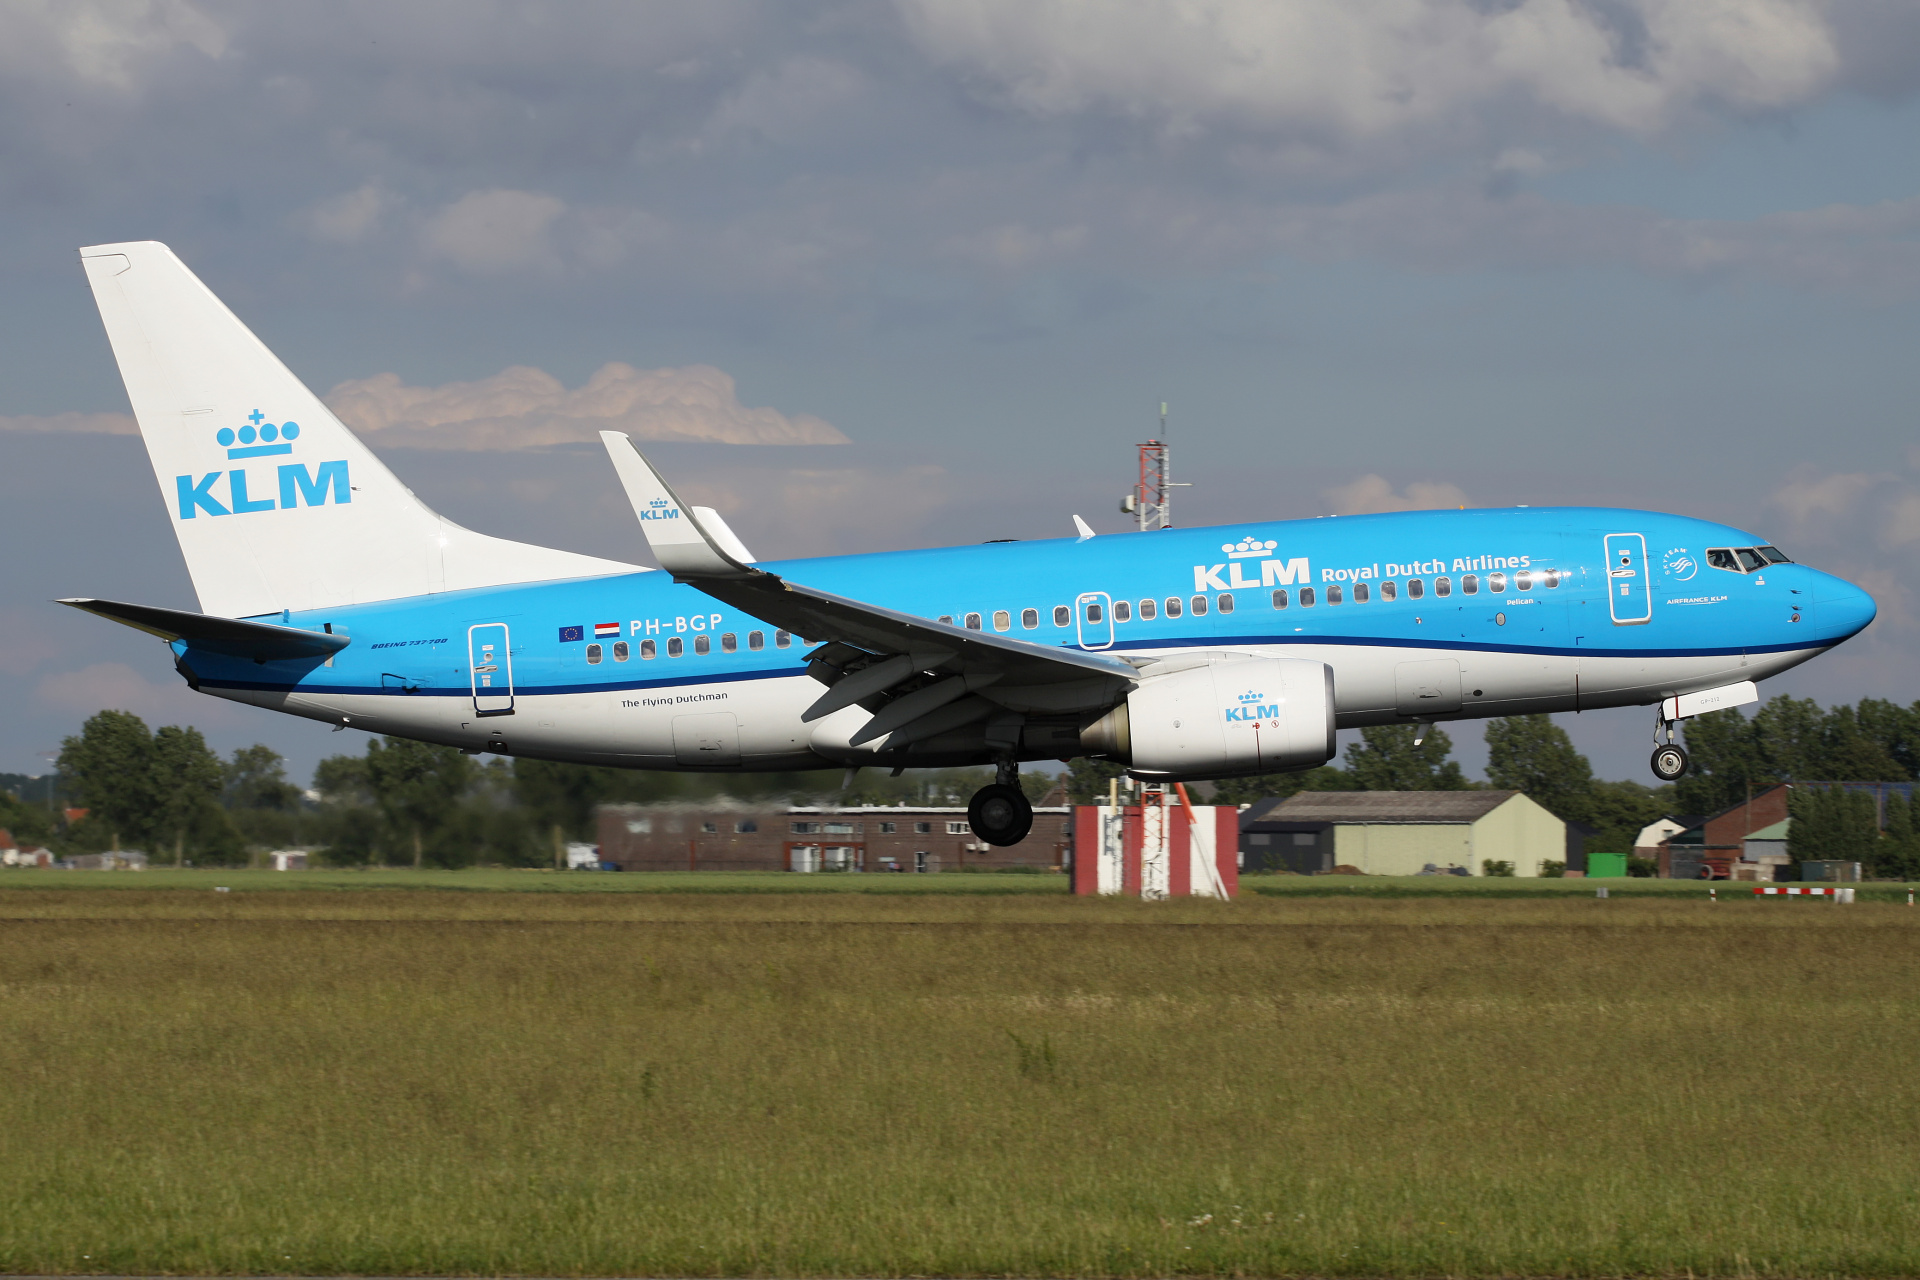 PH-BGP, KLM Royal Dutch Airlines (Aircraft » Schiphol Spotting » Boeing 737-700)